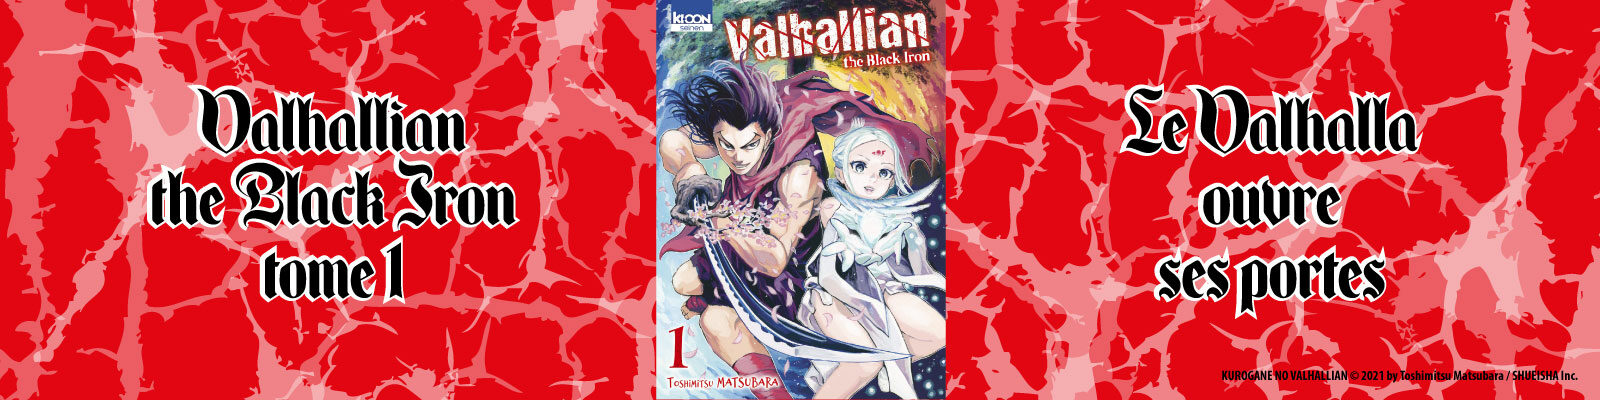 Valhallian the Black Iron-Vol.1